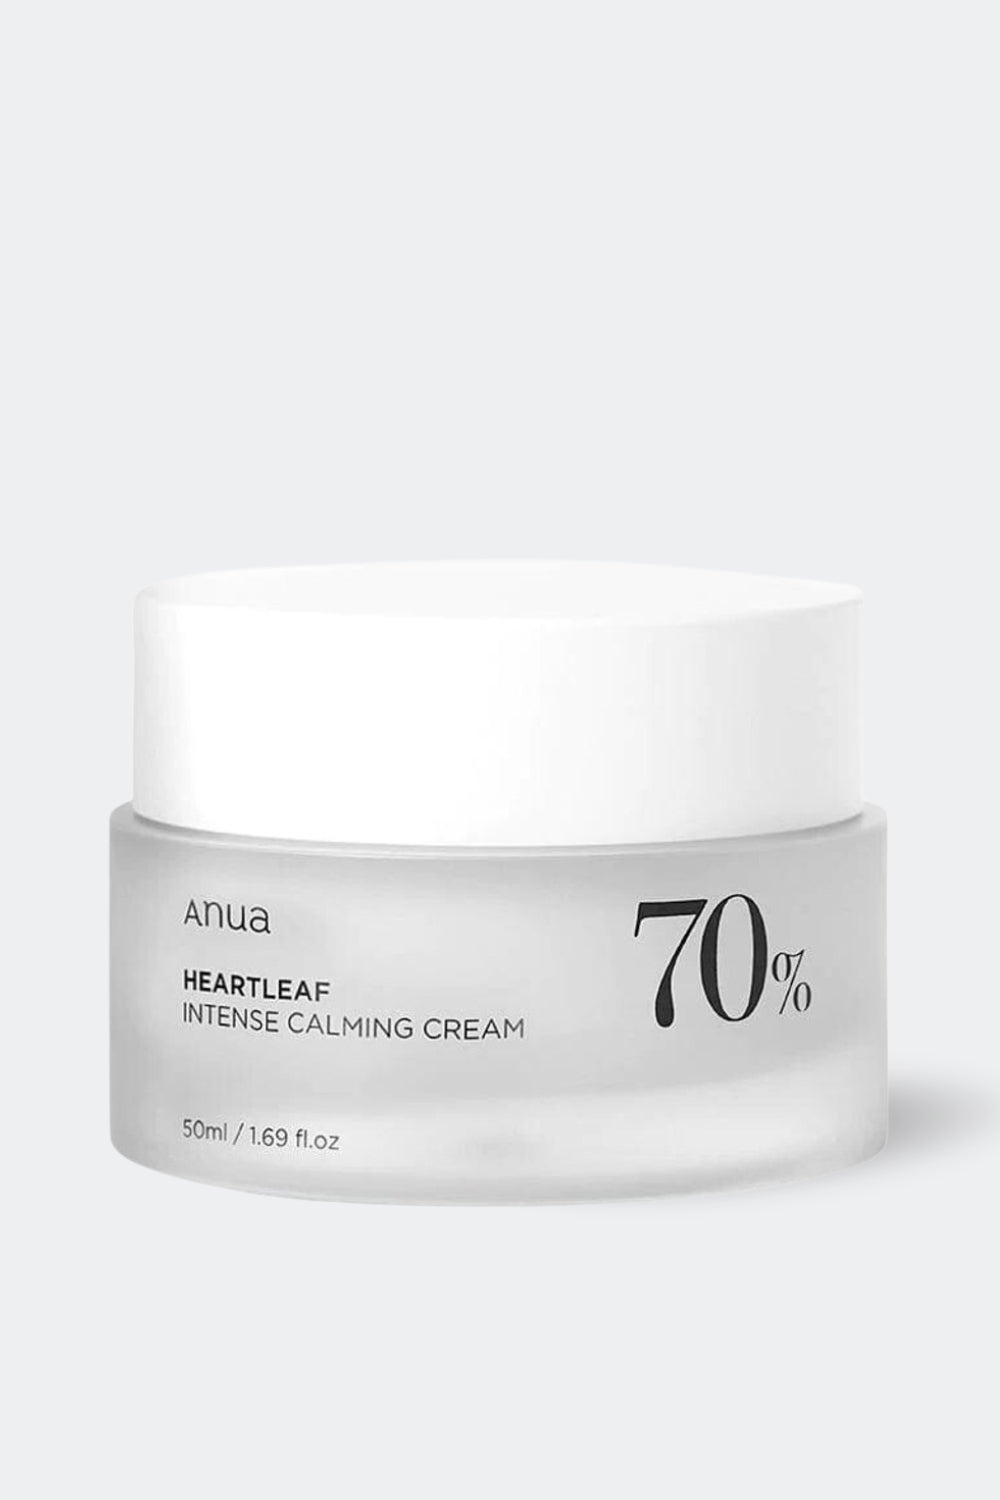 Anua - Heartleaf 70% Intense Calming Cream - 50ml